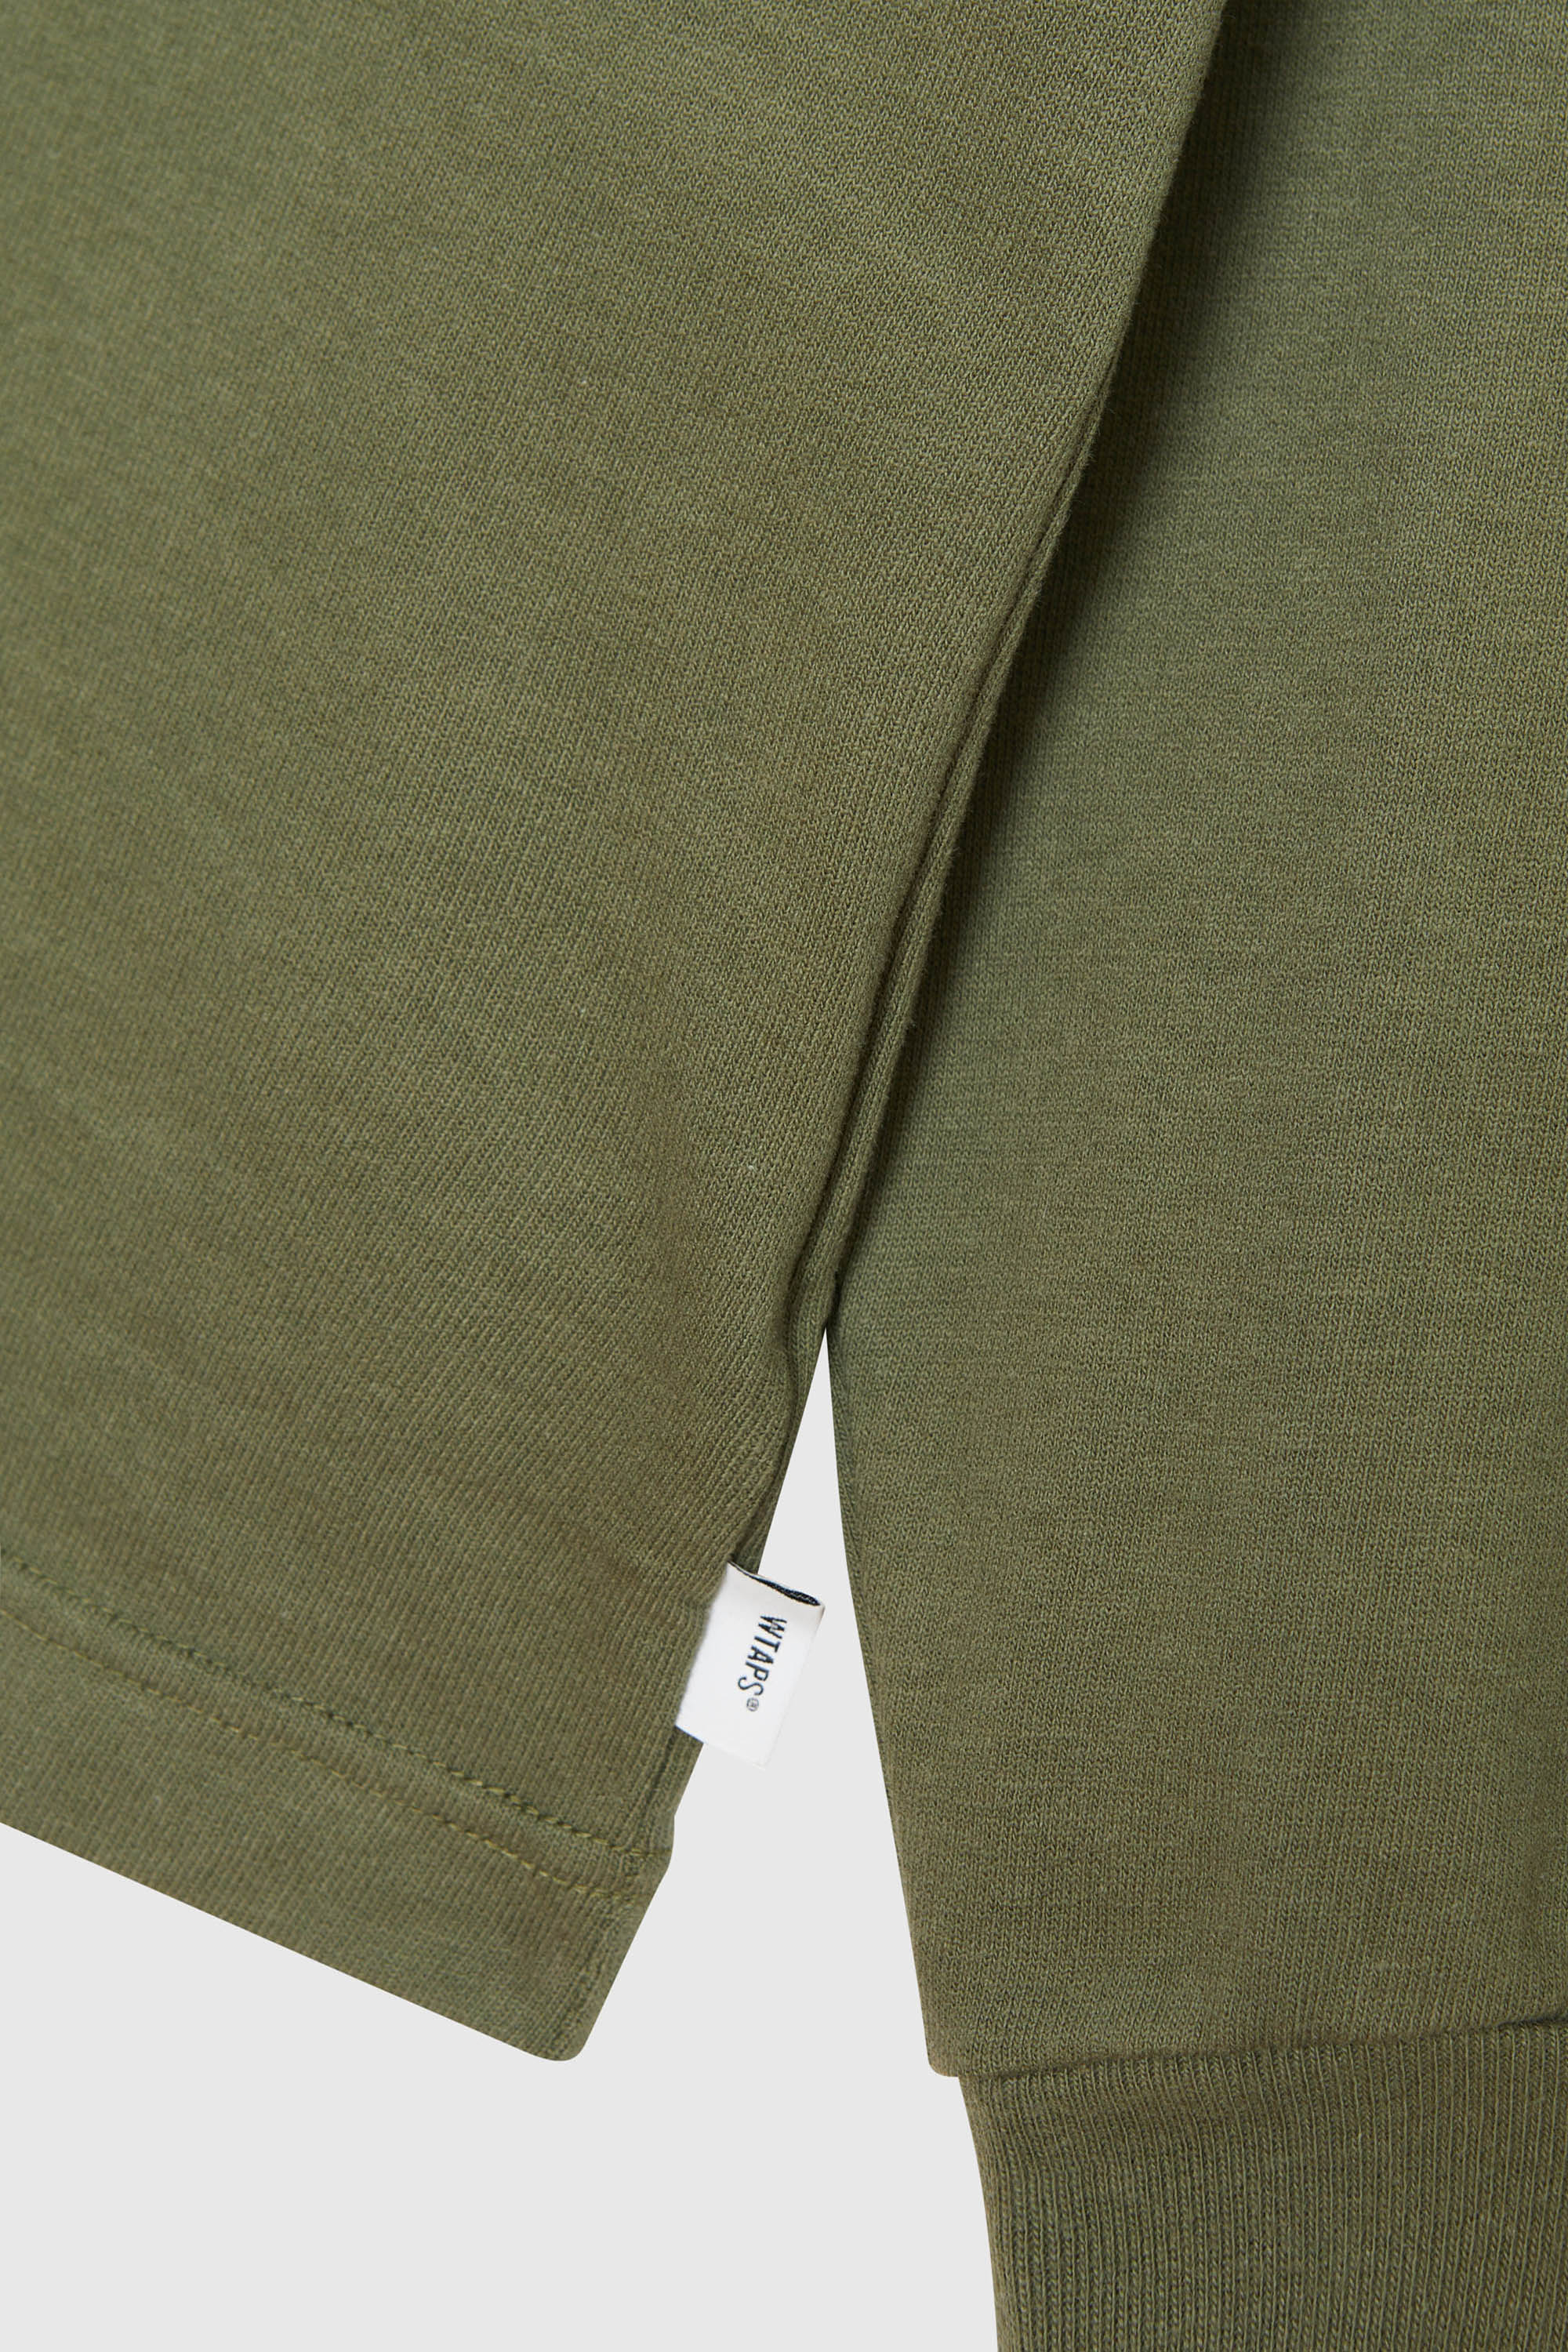 WTAPS Design 03 / Pullover / Knit Olive drab | WoodWood.com